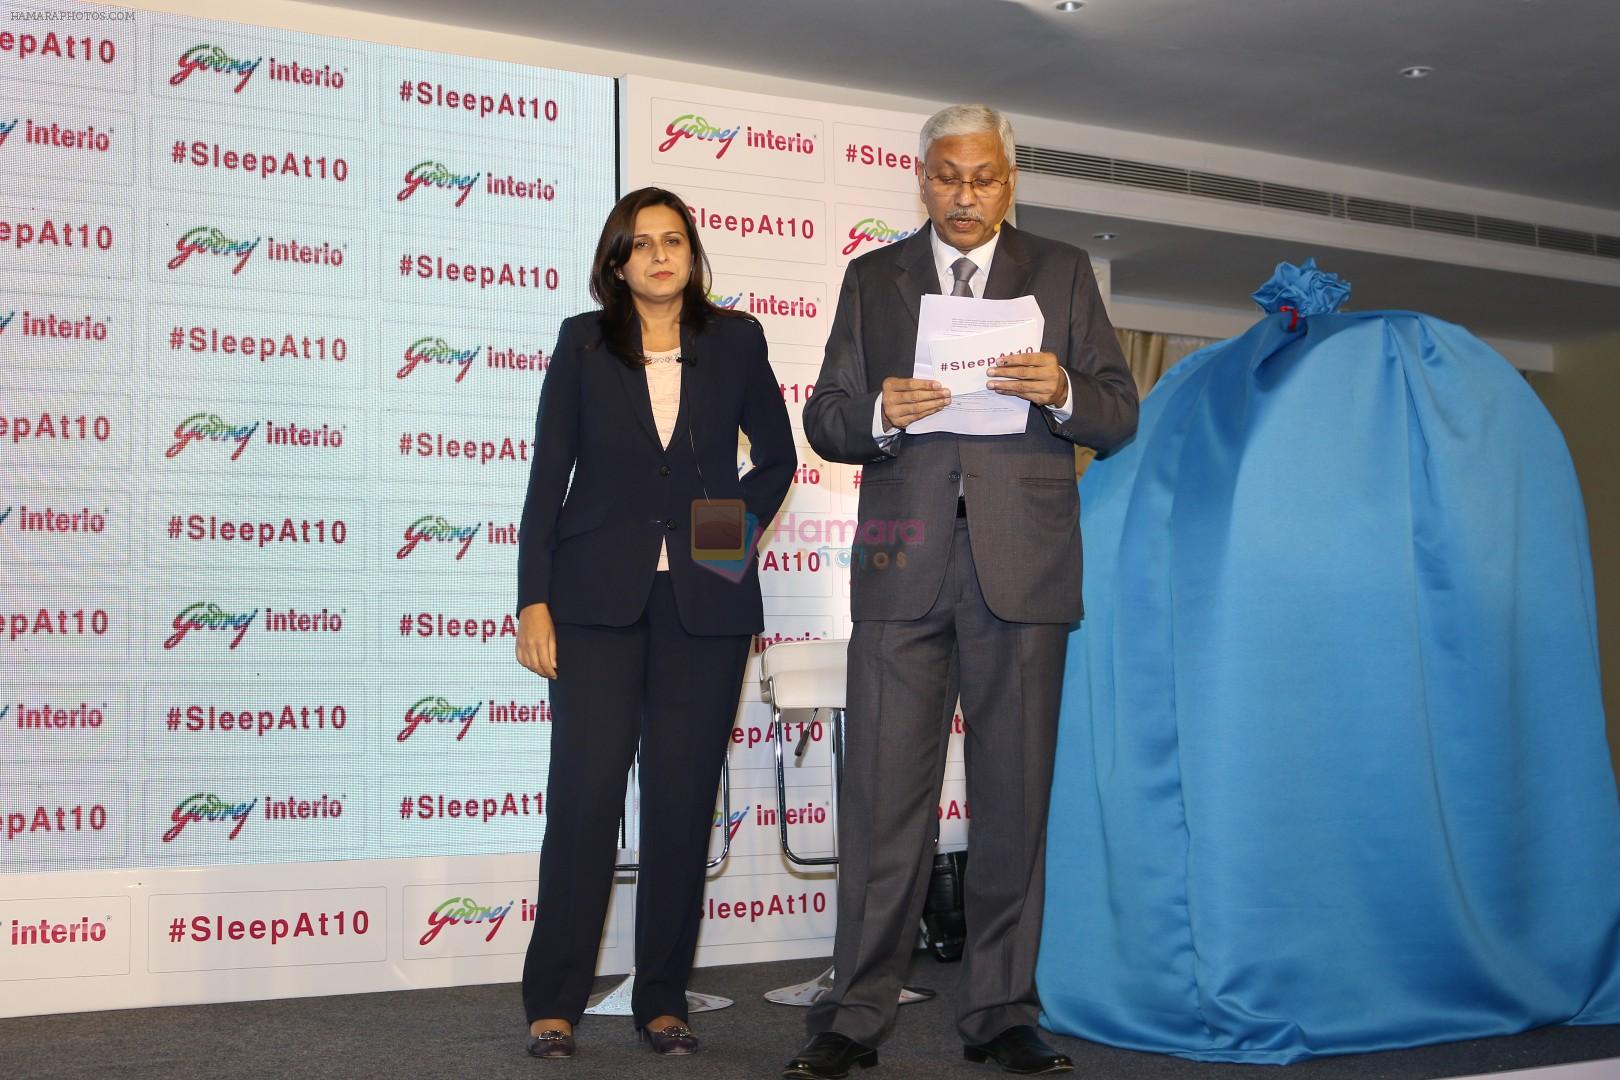 Geeta Phogat Launches Sleep@10 A Nationwide Health Awarness Program